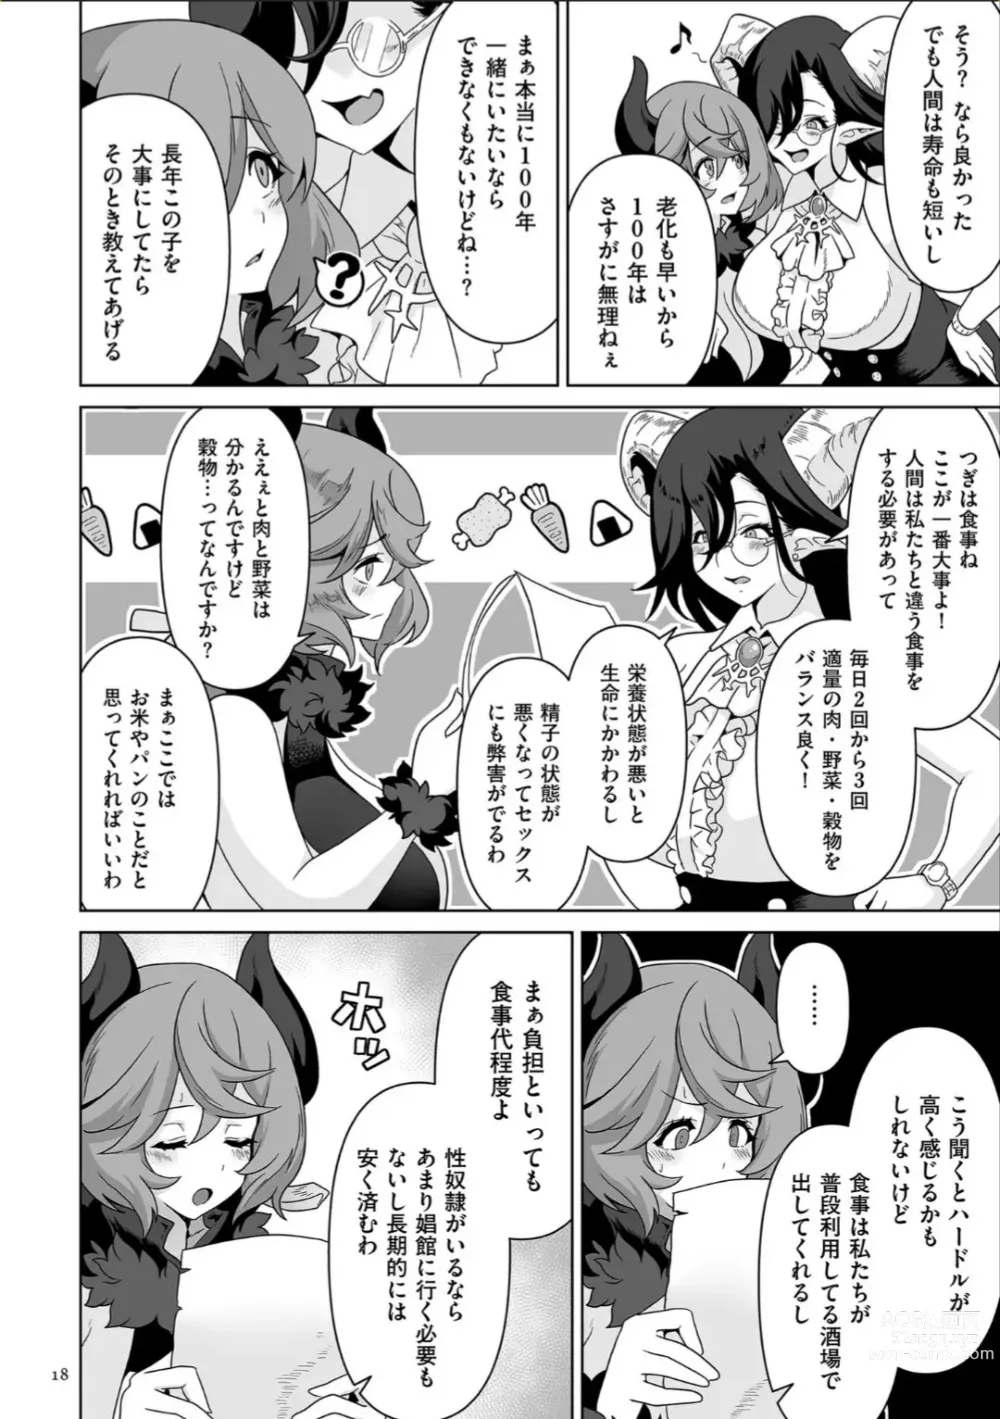 Page 18 of manga Succubus Kingdom